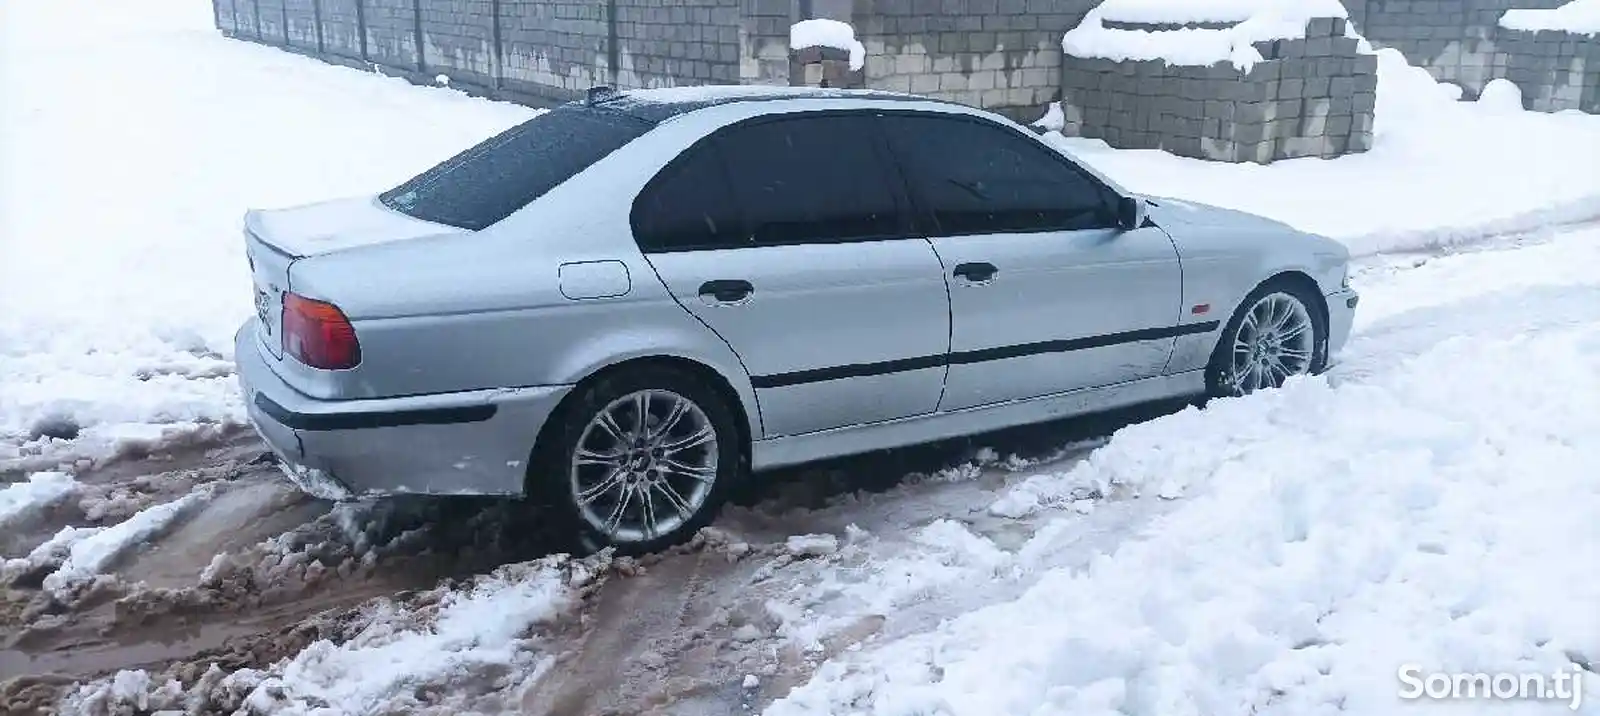 BMW 5 series, 2000-7